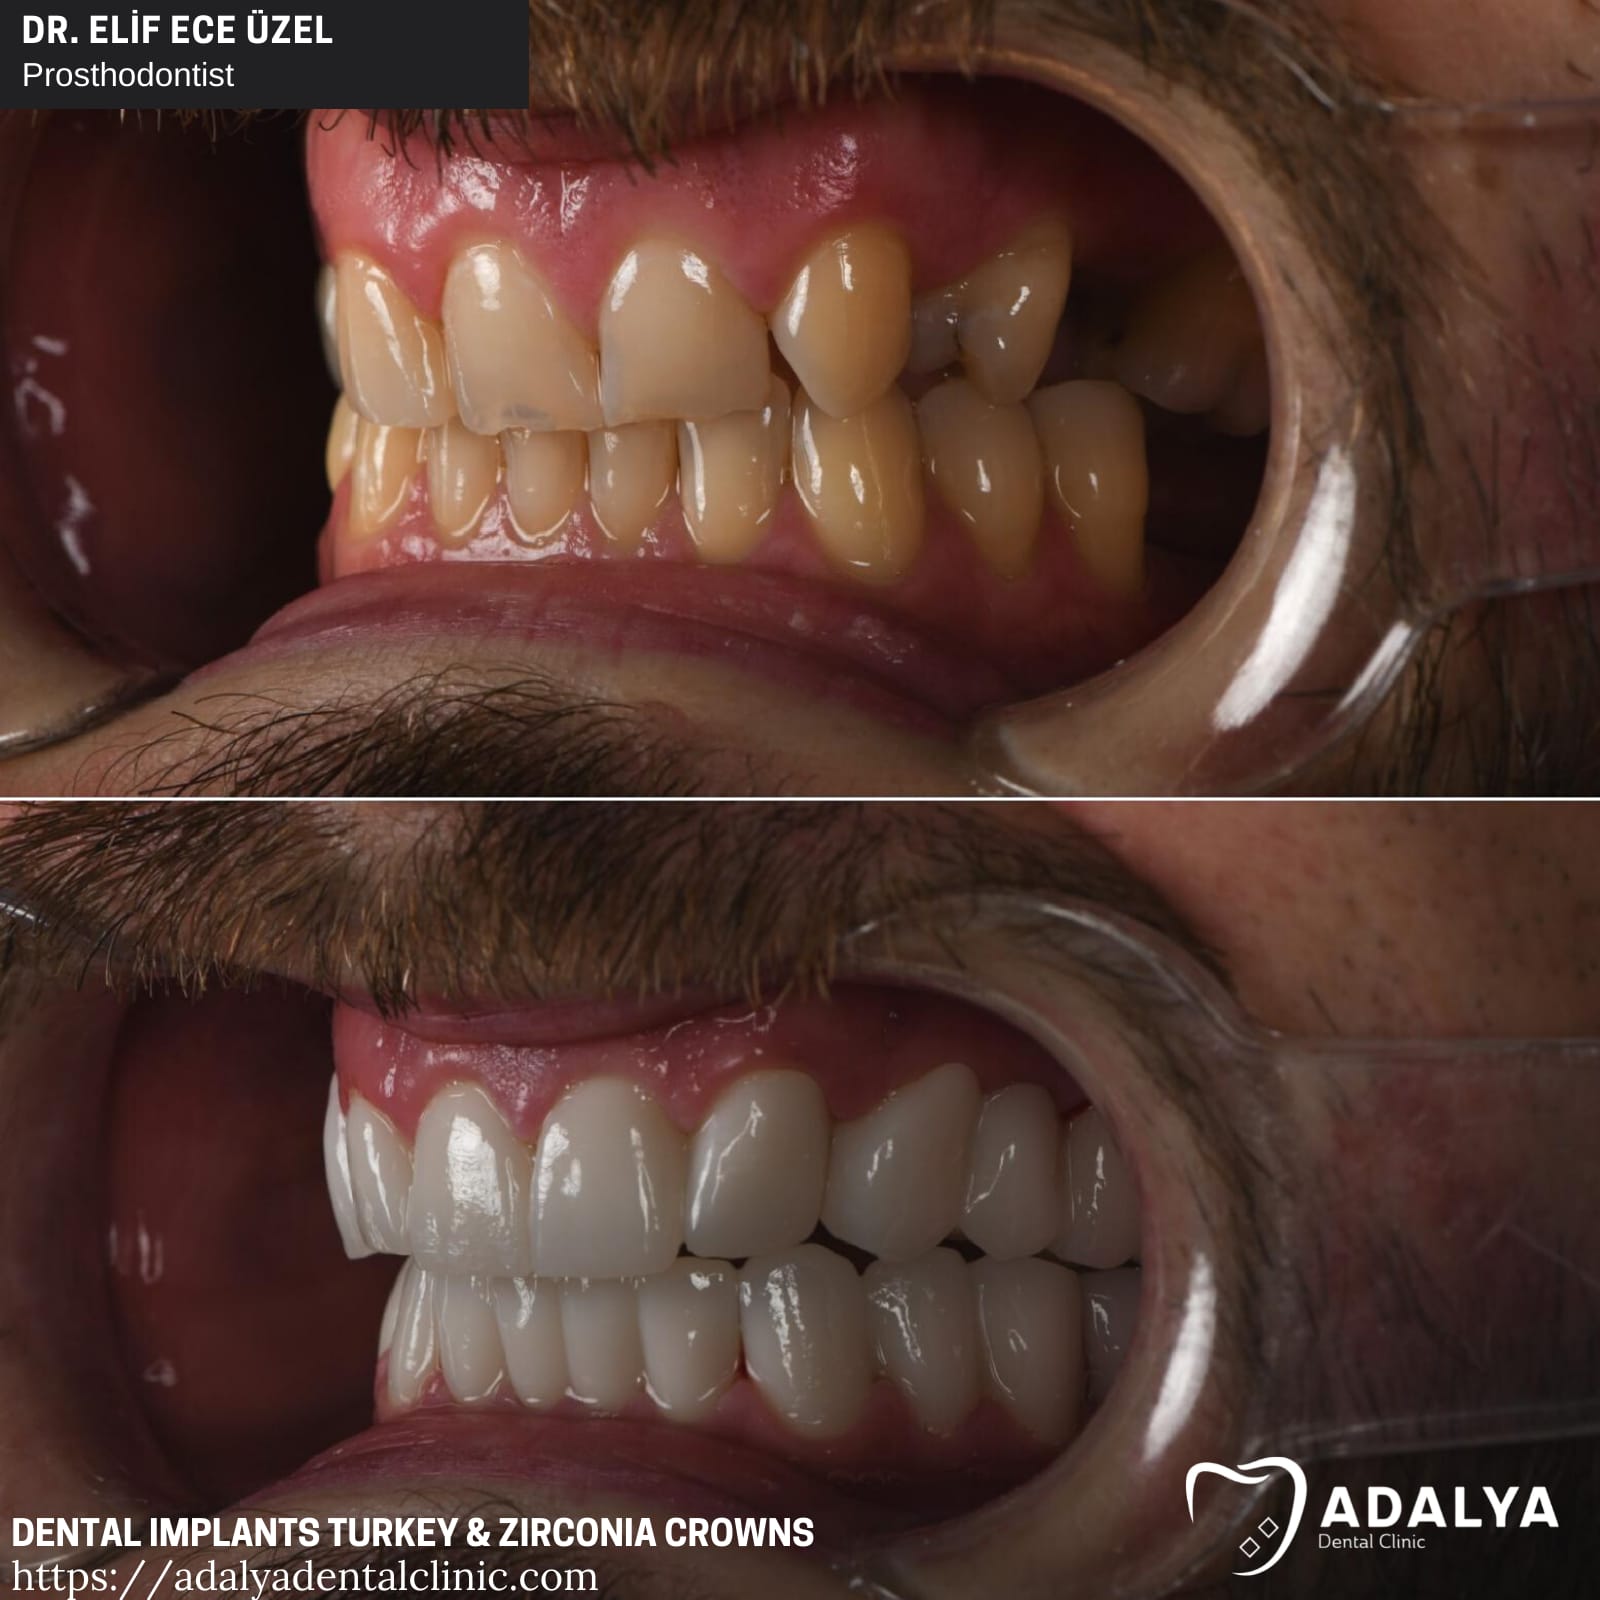 adalya dental implants turkey antalya zirconia crowns cost